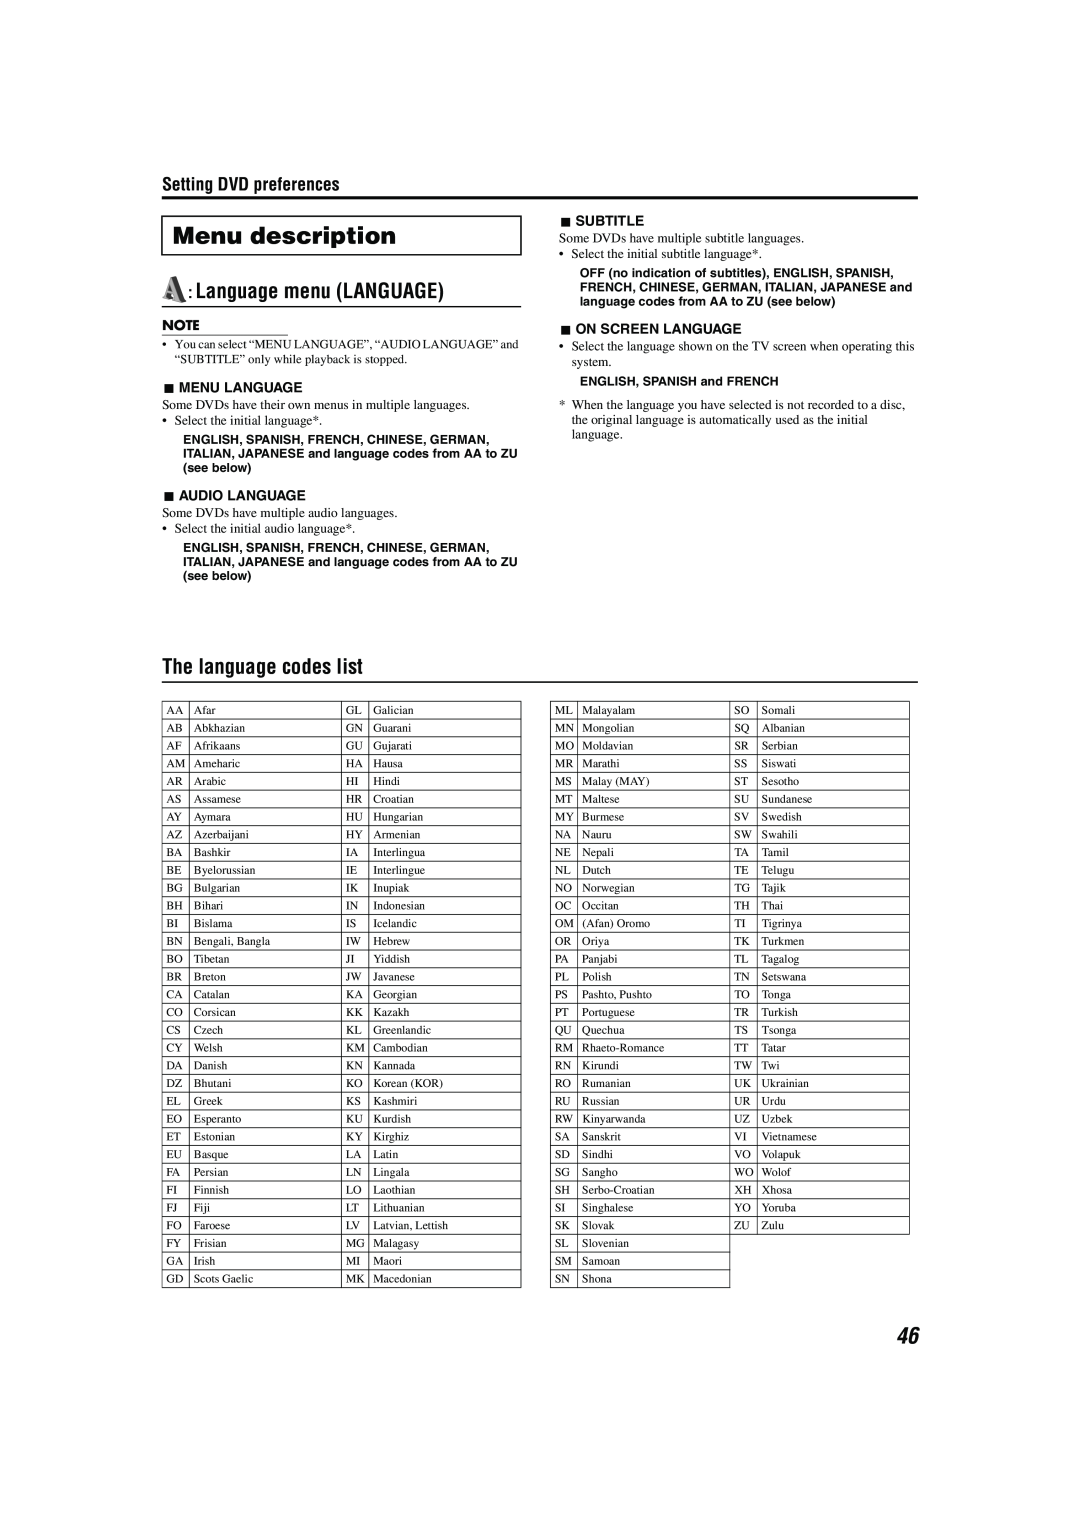 JVC TH-M42 manual Menu description, Language menu LANGUAGE, The language codes list, Setting DVD preferences 